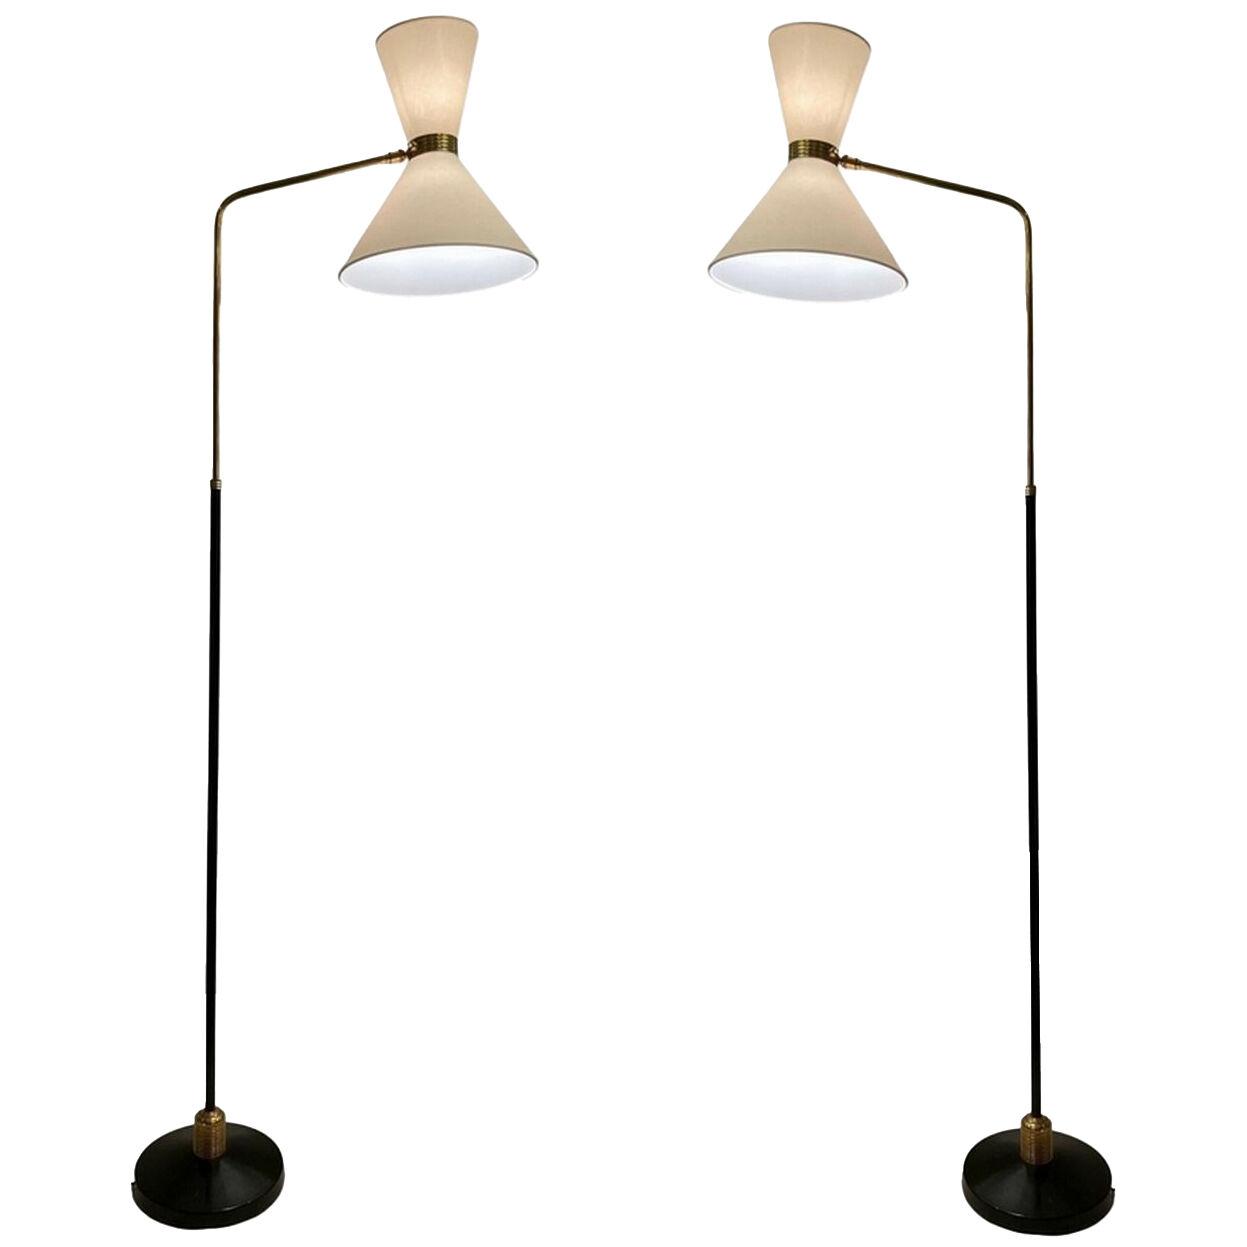 Pair of Monix floor lamps, France around 1950 